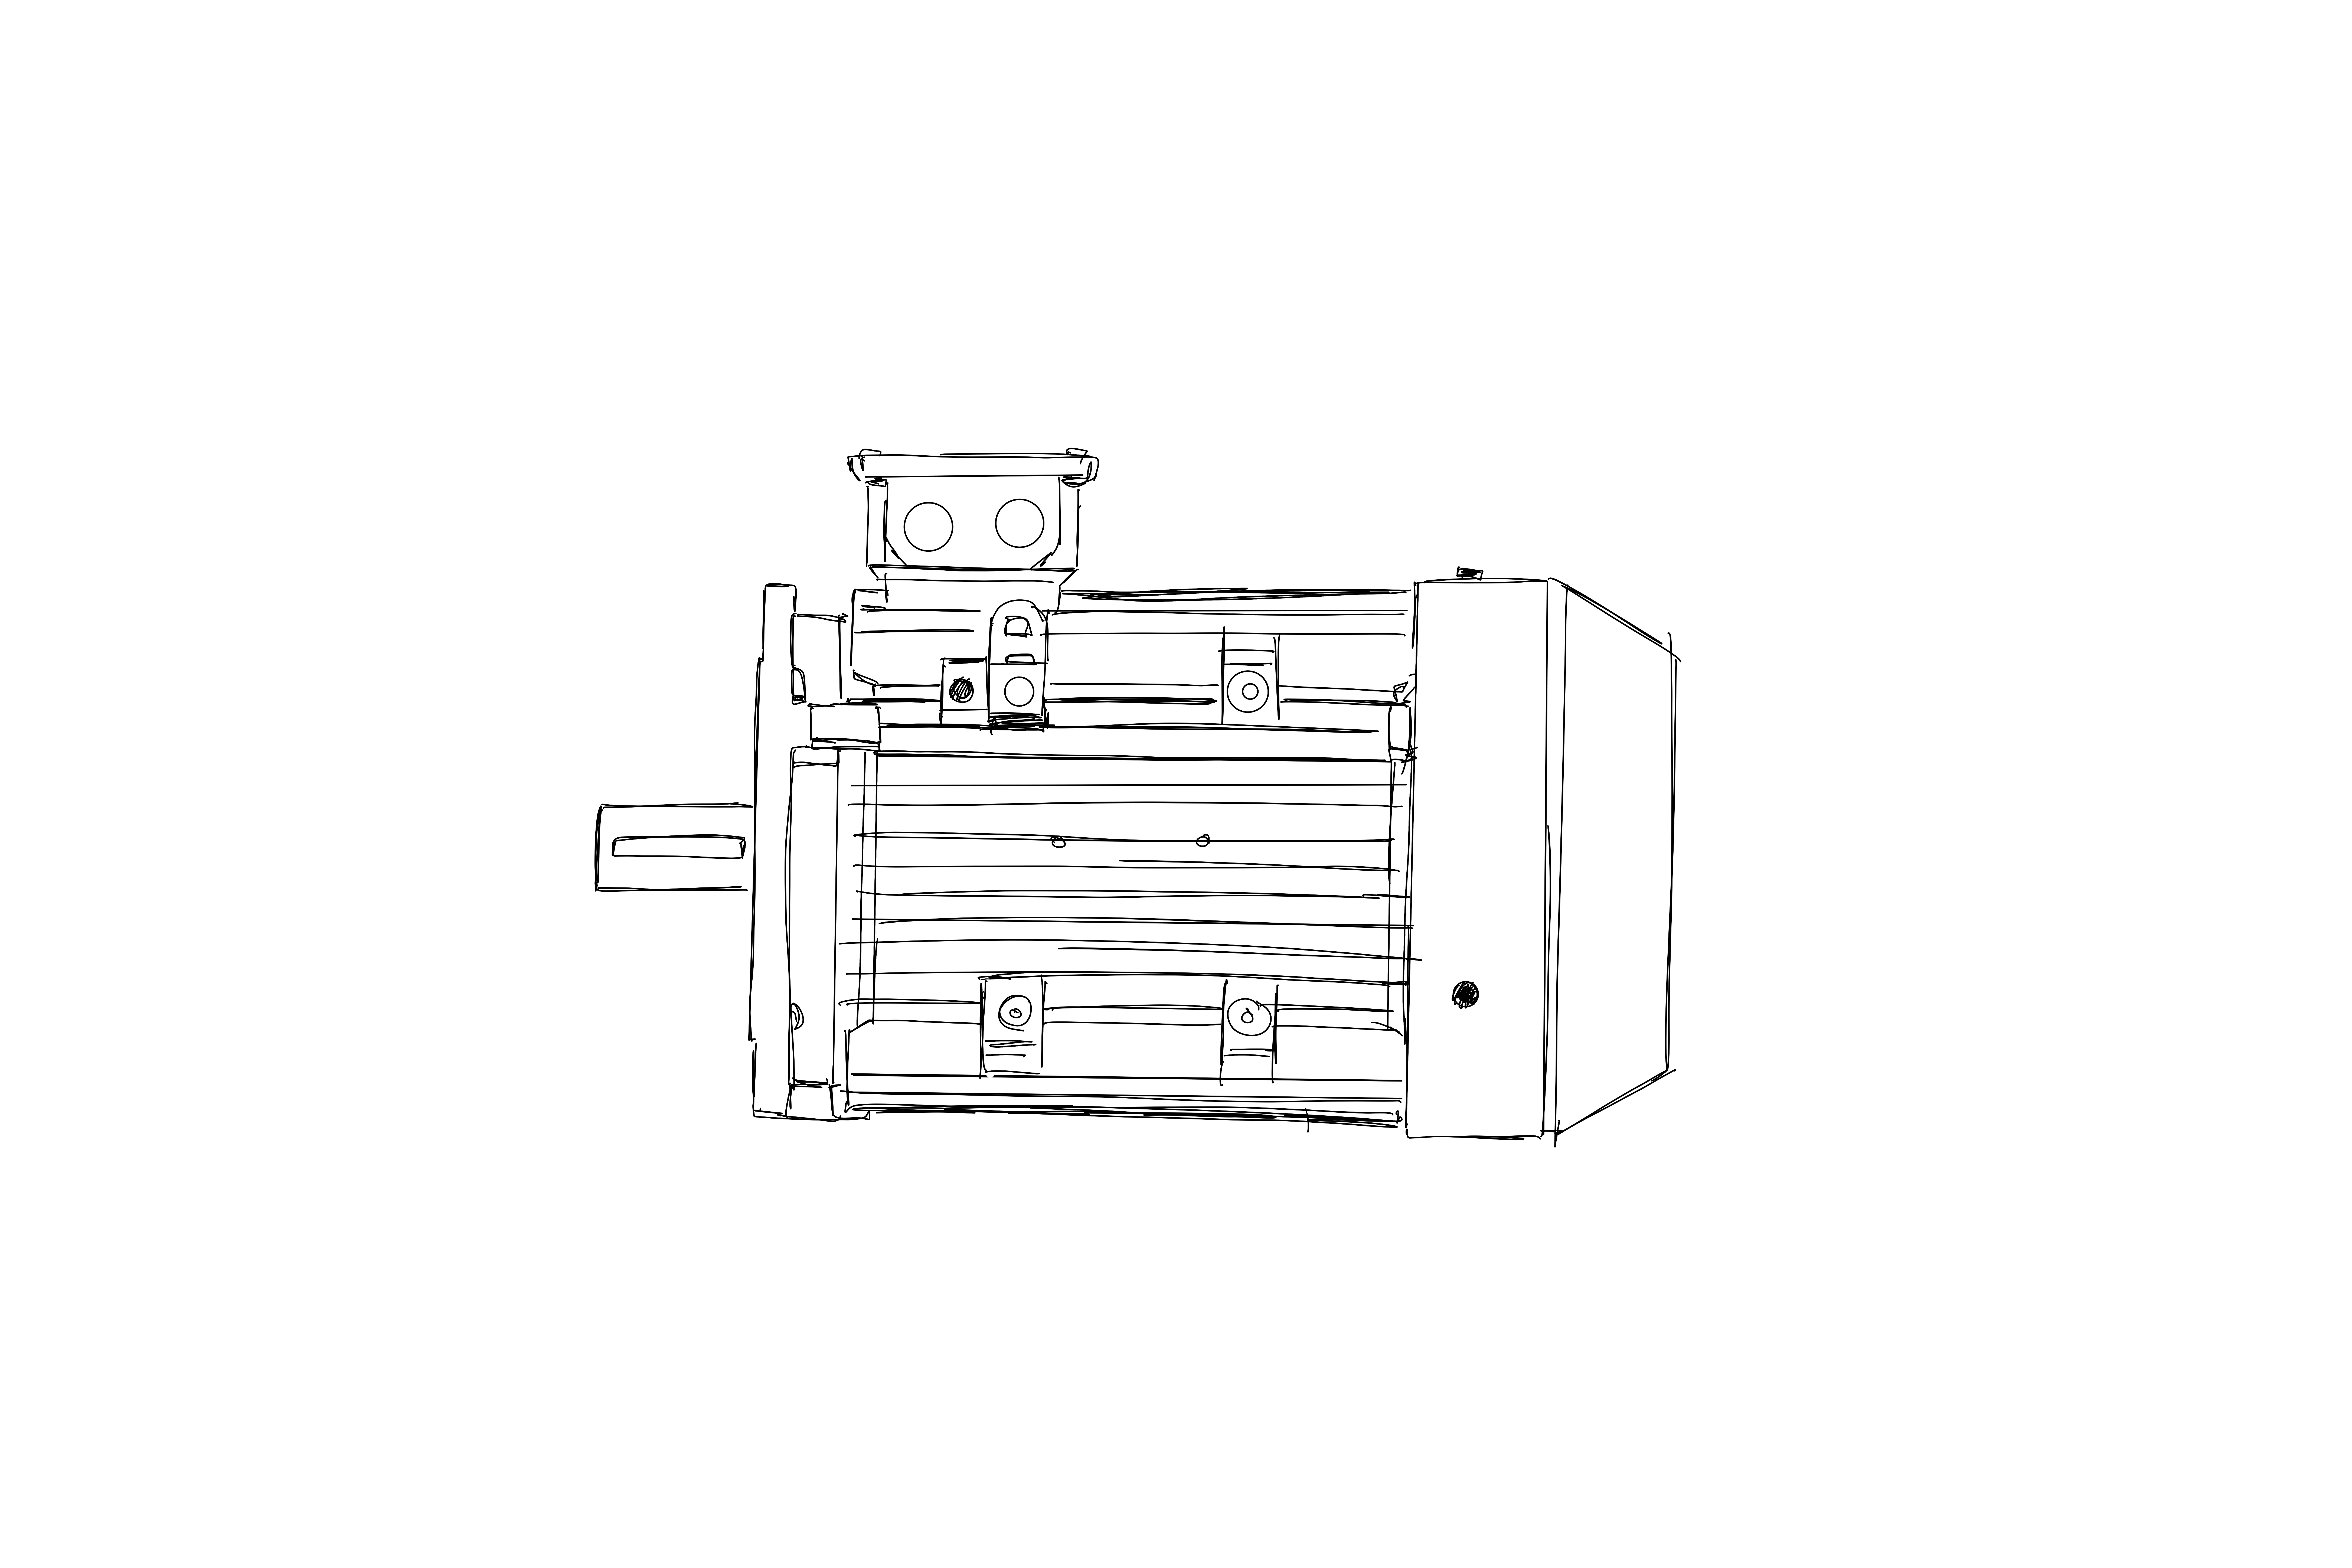 Single-phase motor FBS 63 B 2